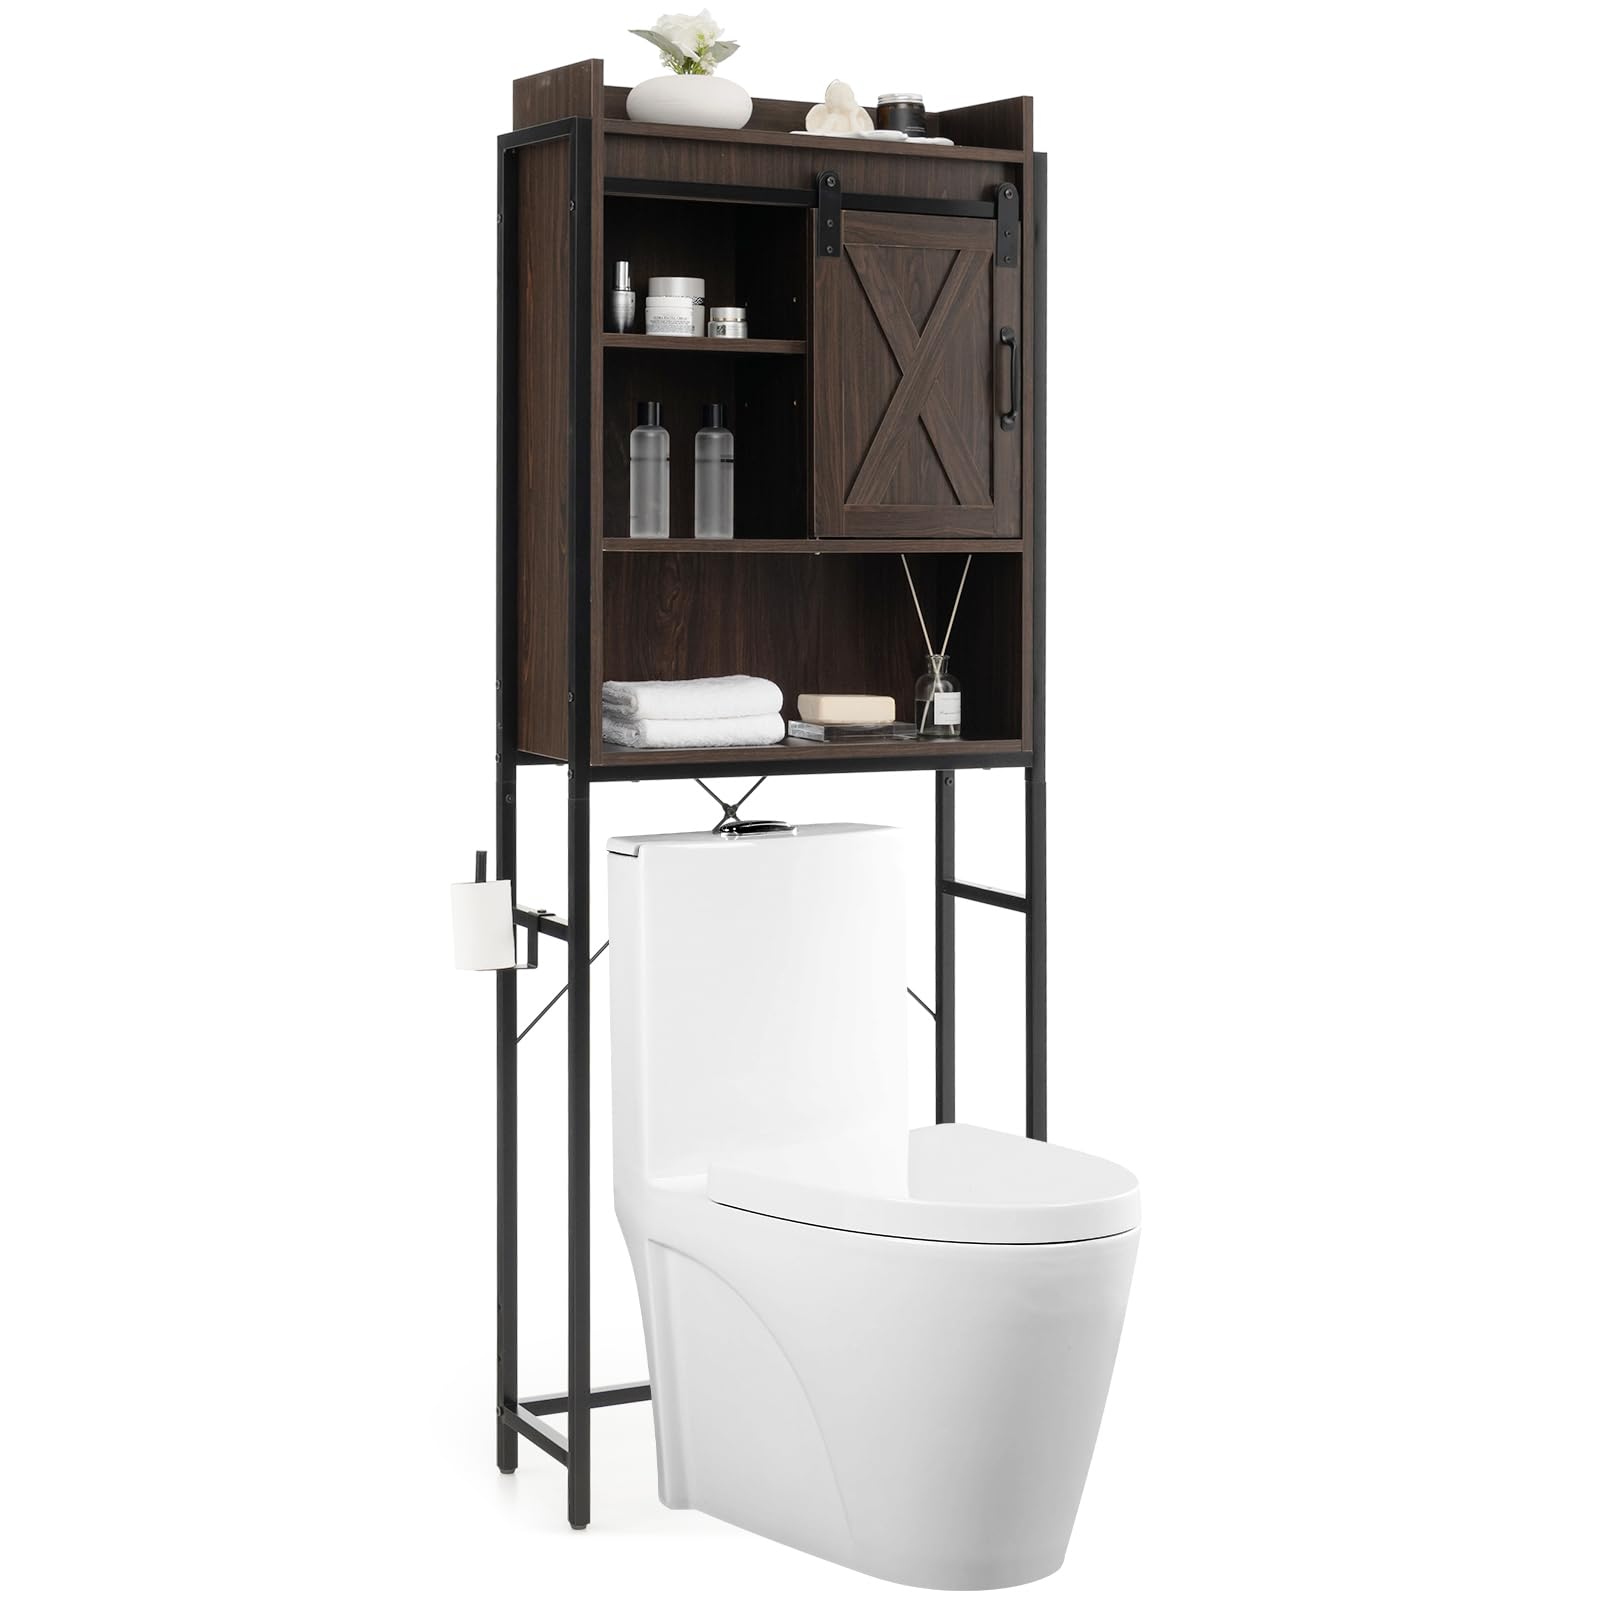 Giantex Over-The-Toilet Storage Cabinet, Freestanding 4-Tier Bathroom Organizer Rack